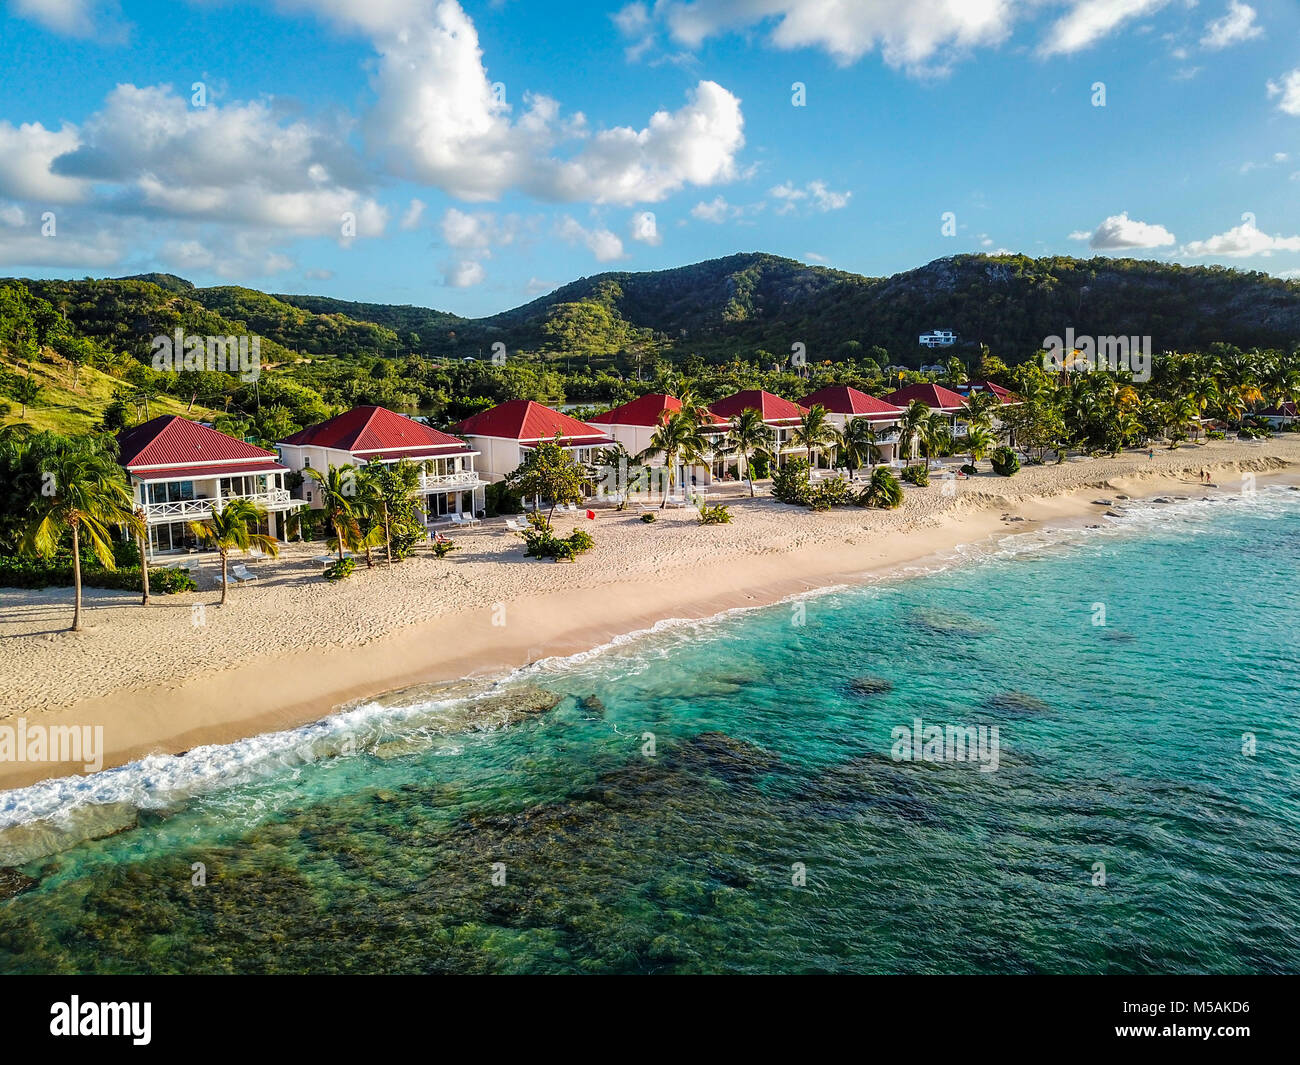 Galley Bay Beach Resort and Spa, Antigua Stock Photo